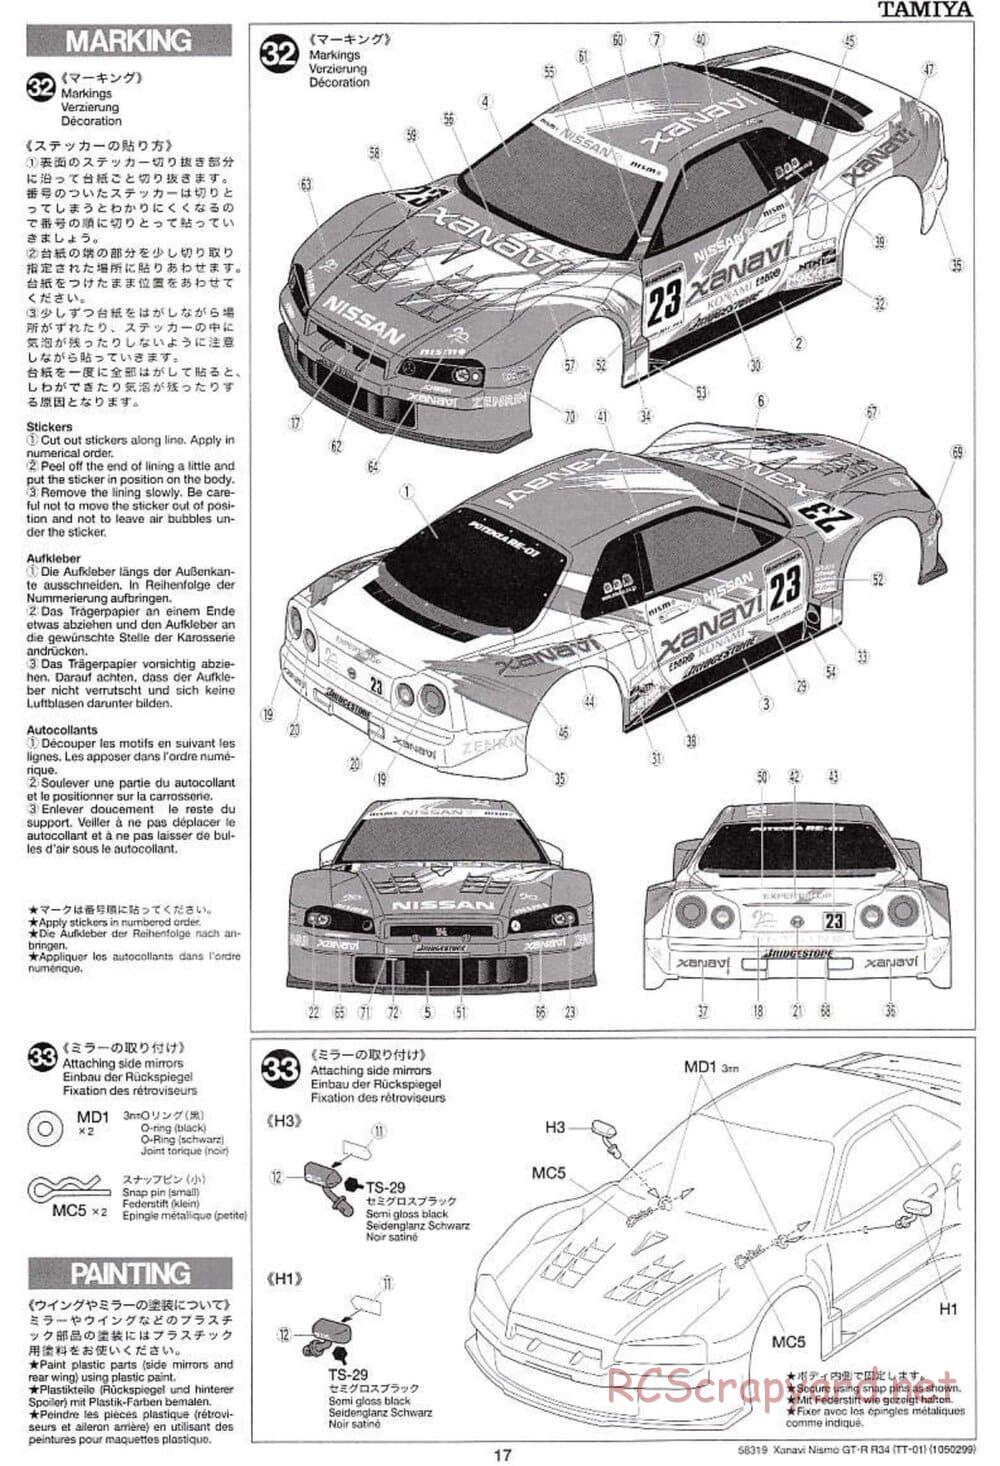 Tamiya - Xanavi Nismo GT-R R34 - TT-01 Chassis - Manual - Page 17